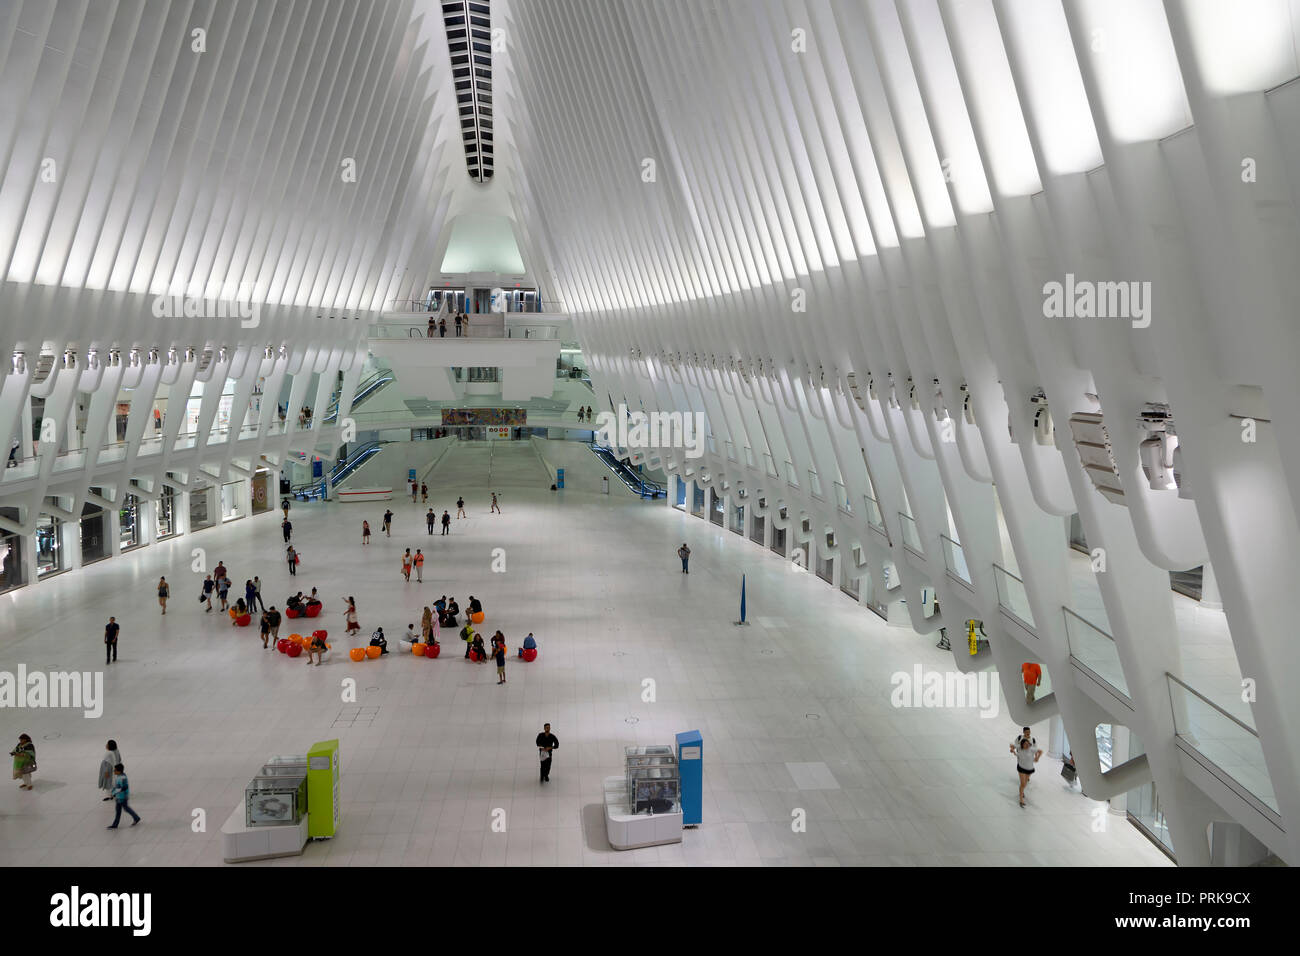 inside the Oculus Train station, Downtown New York, Lower Manhattan, USA Stock Photo